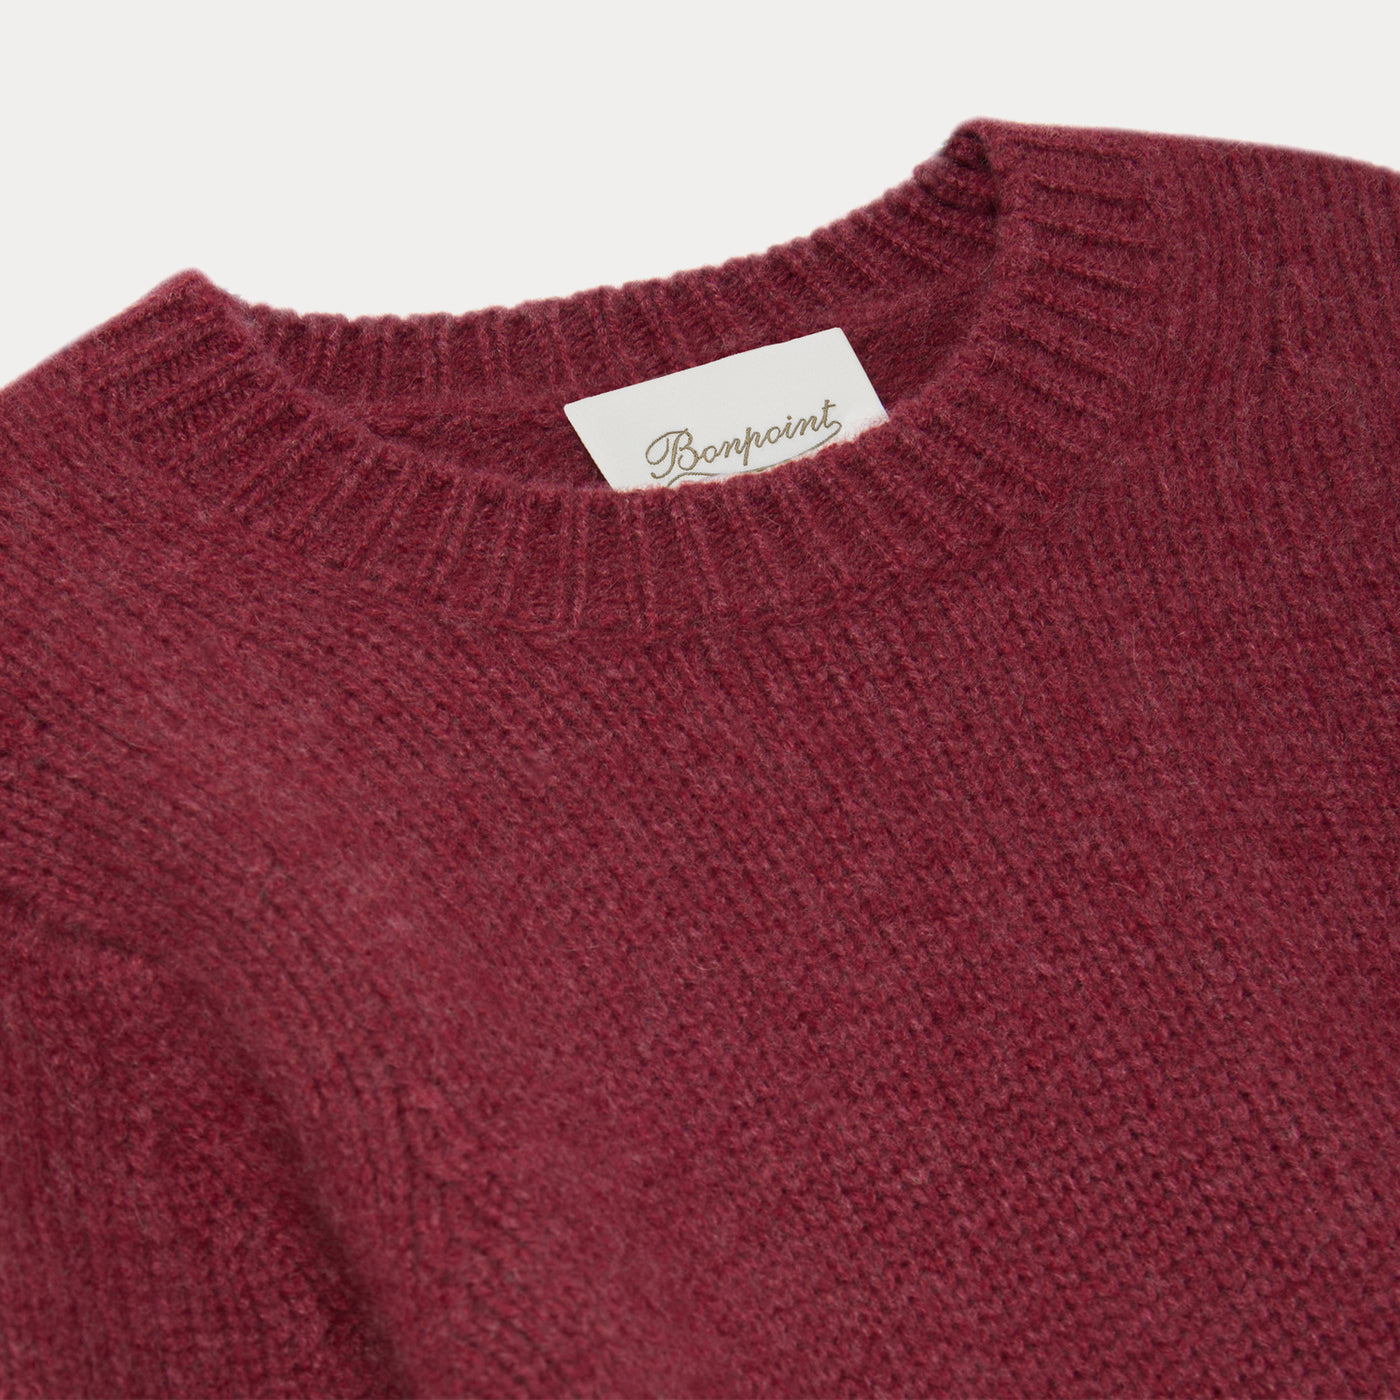 York Sweater burgundy